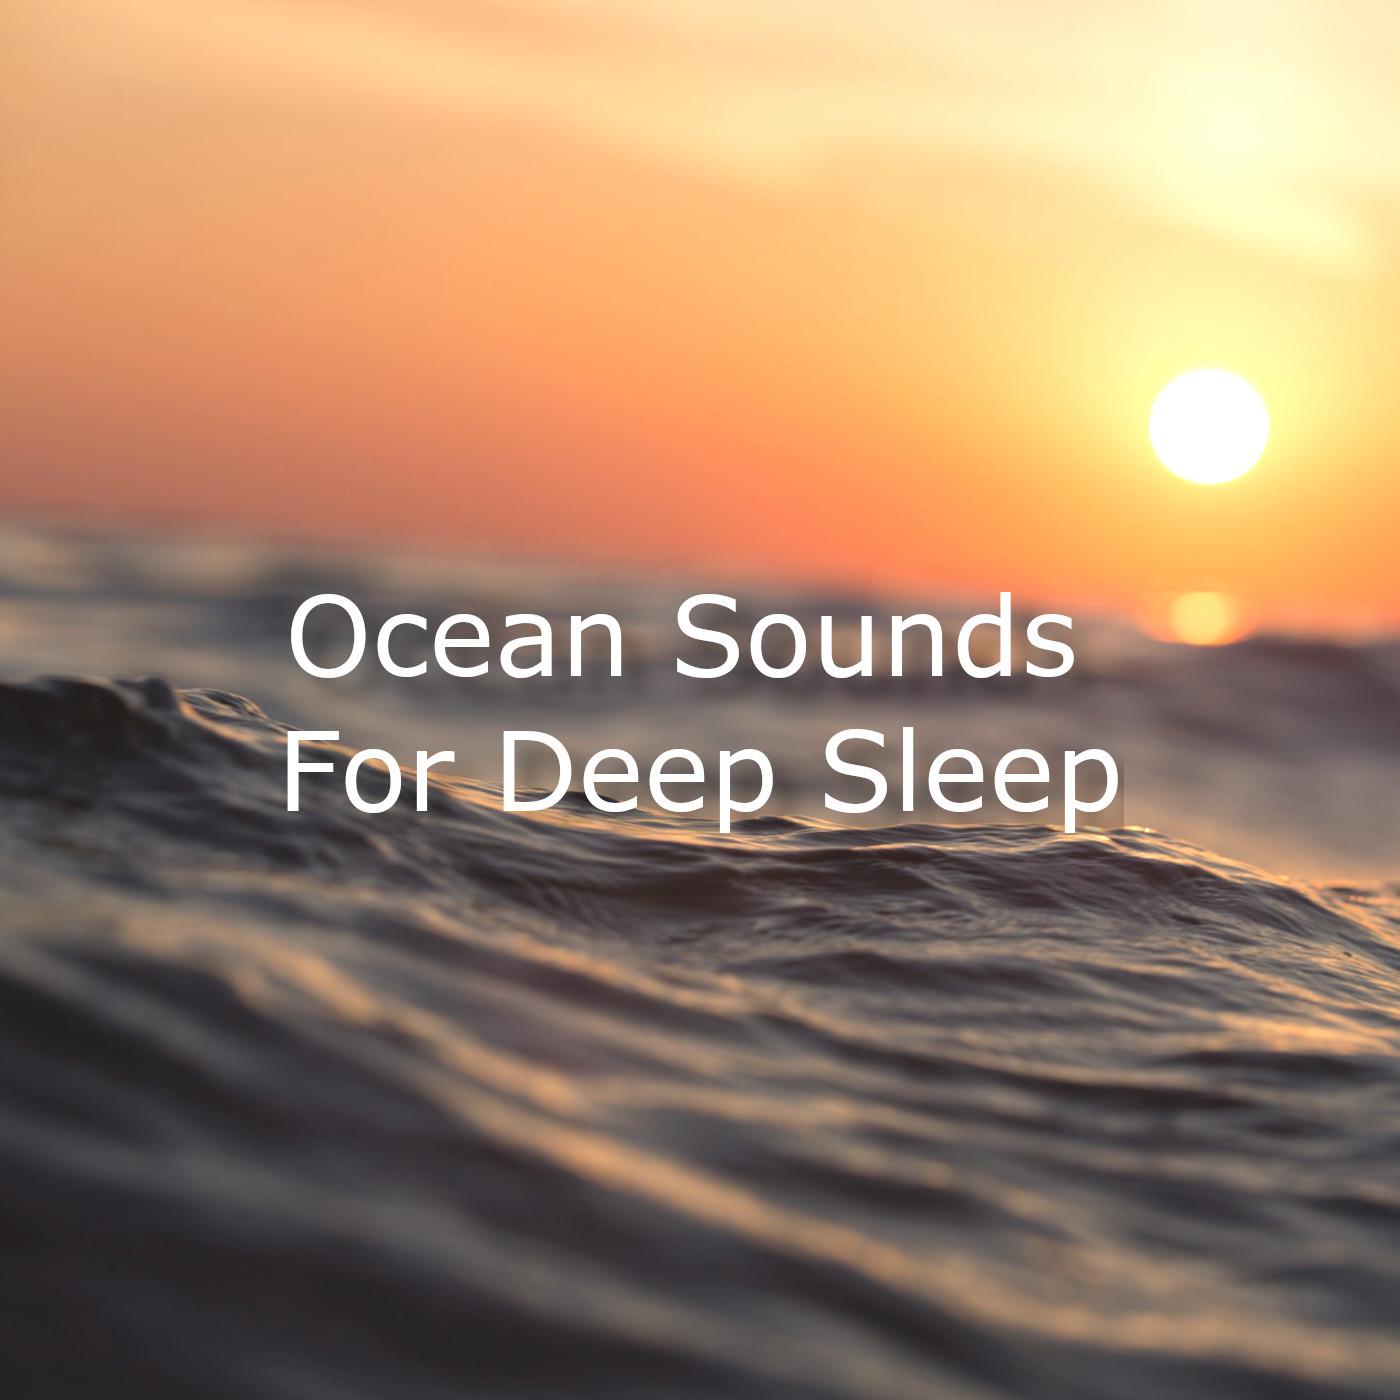 Ocean Sounds For Deep Sleep